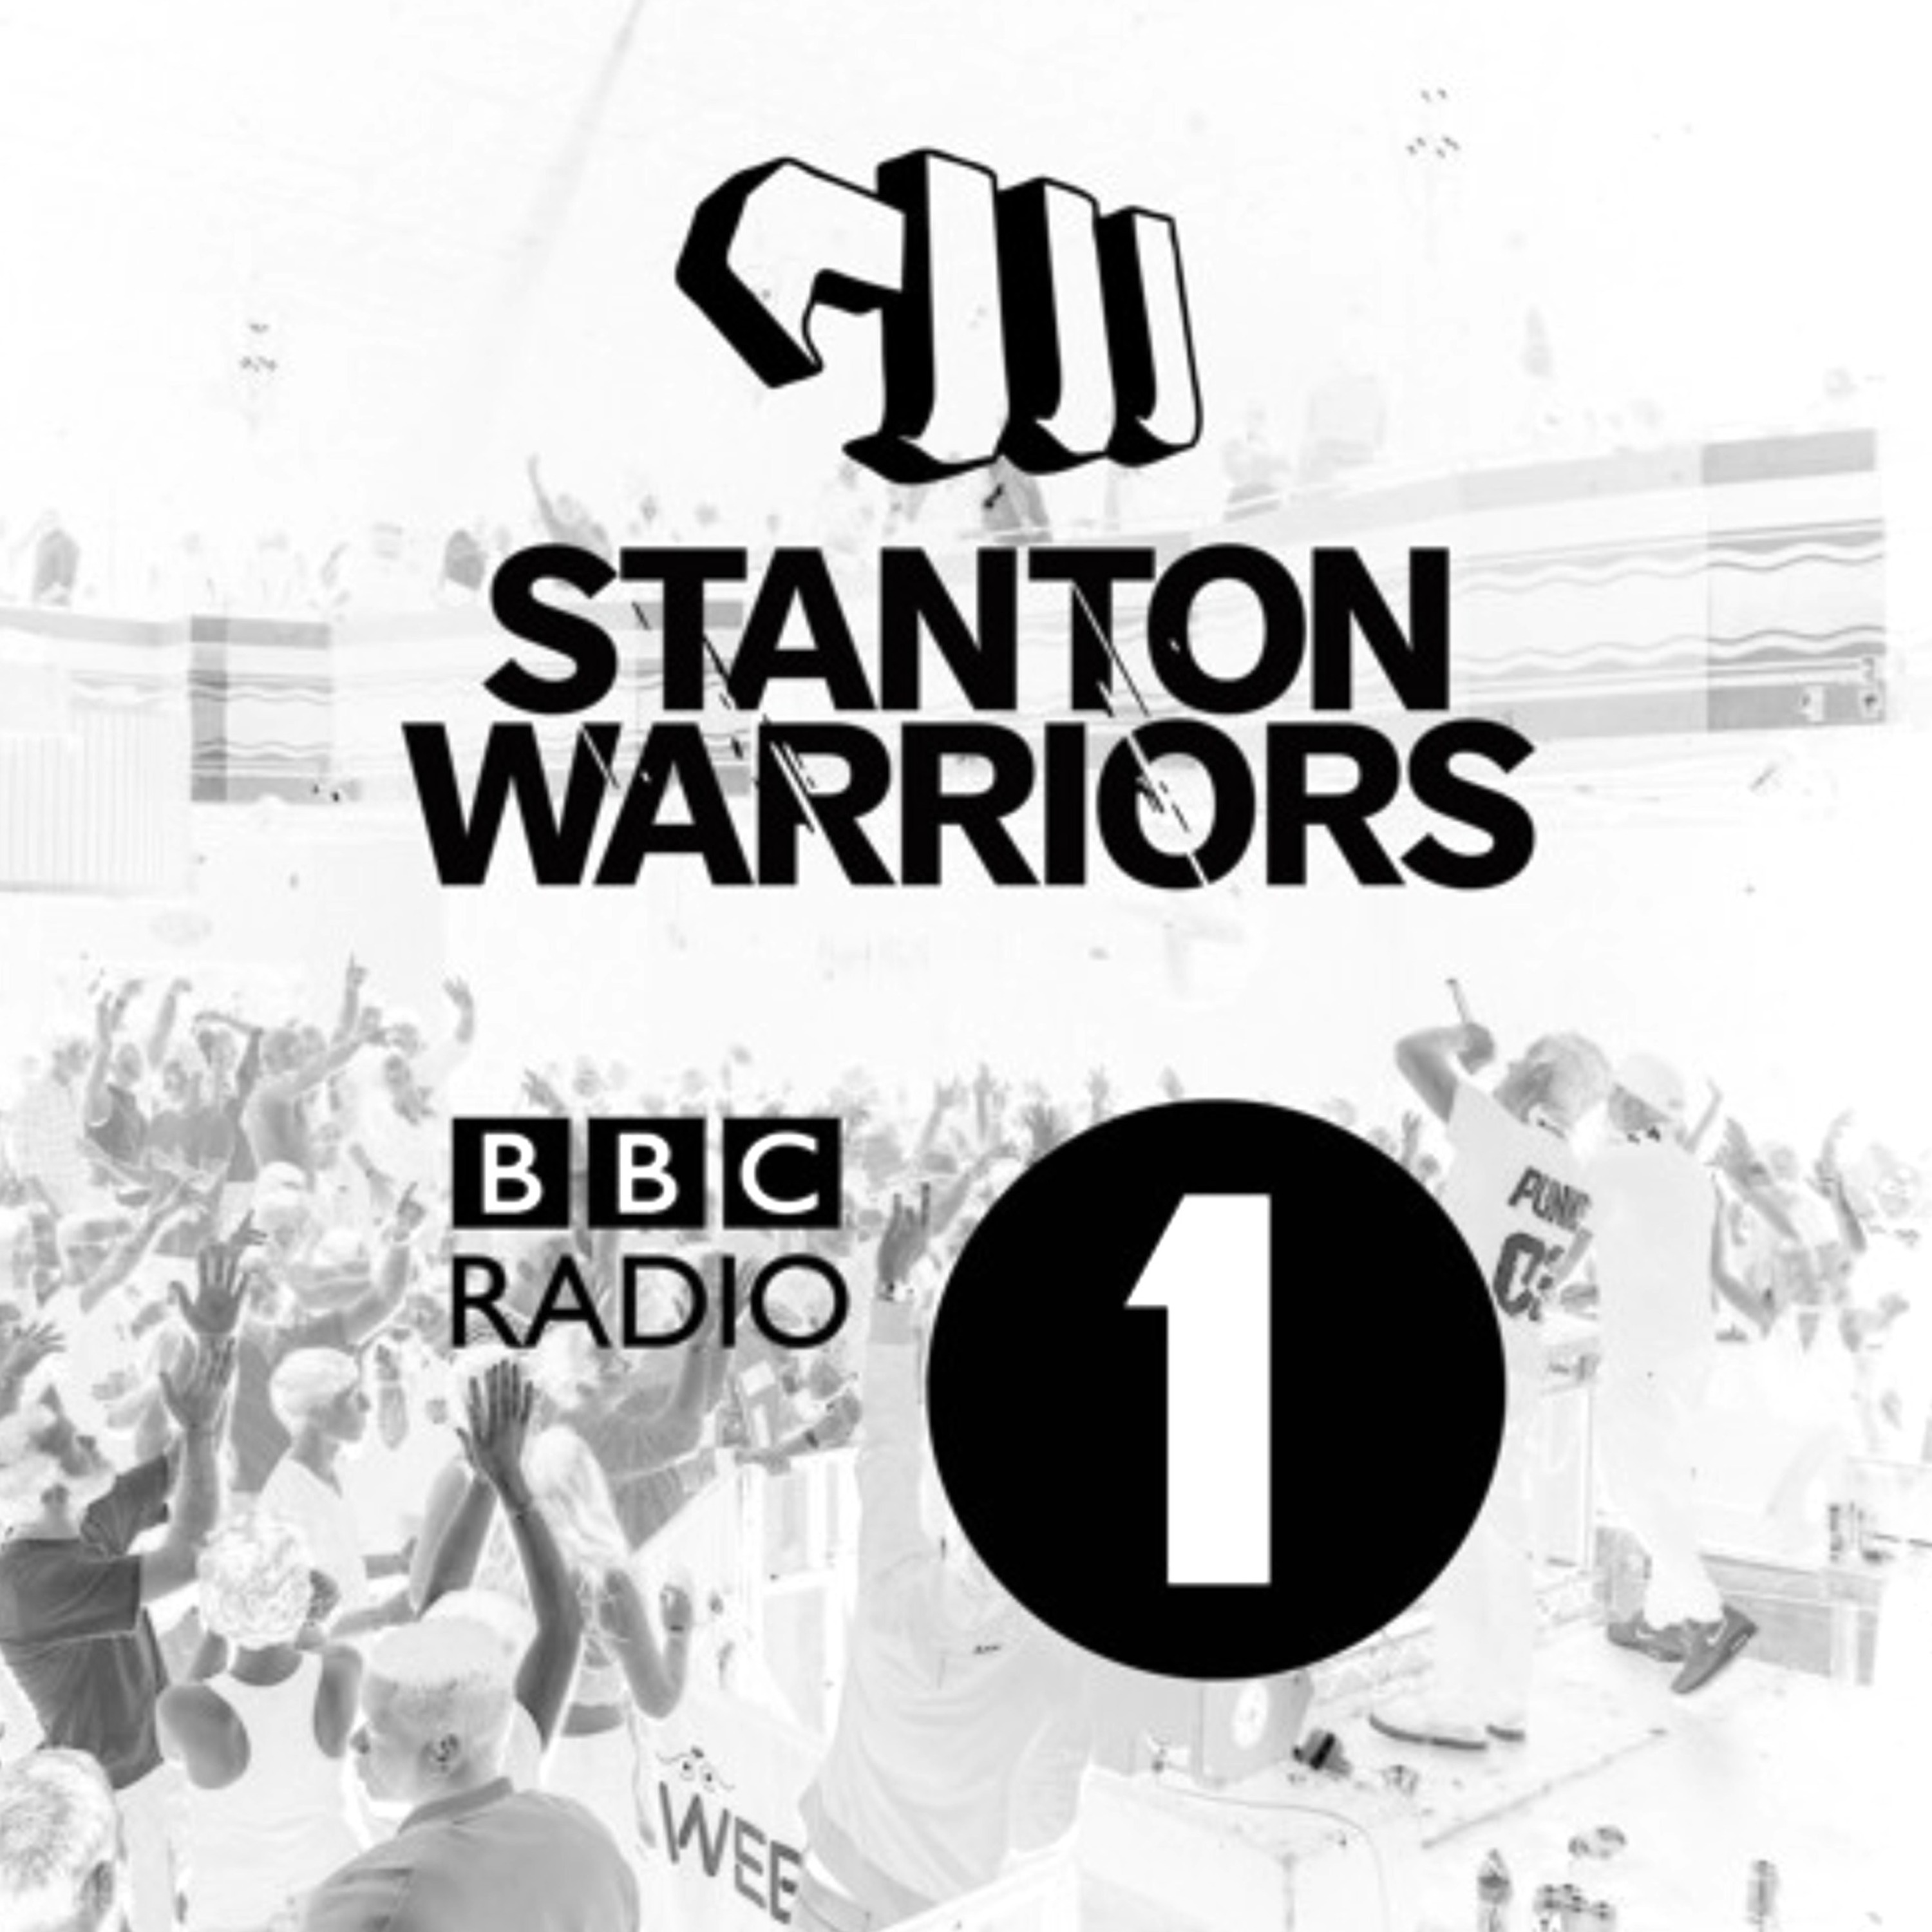 Stanton warriors. Stanton Warrior фото. Warriors bbc. Zak Toms - bring me down (Stanton Warriors Vocal Mix).